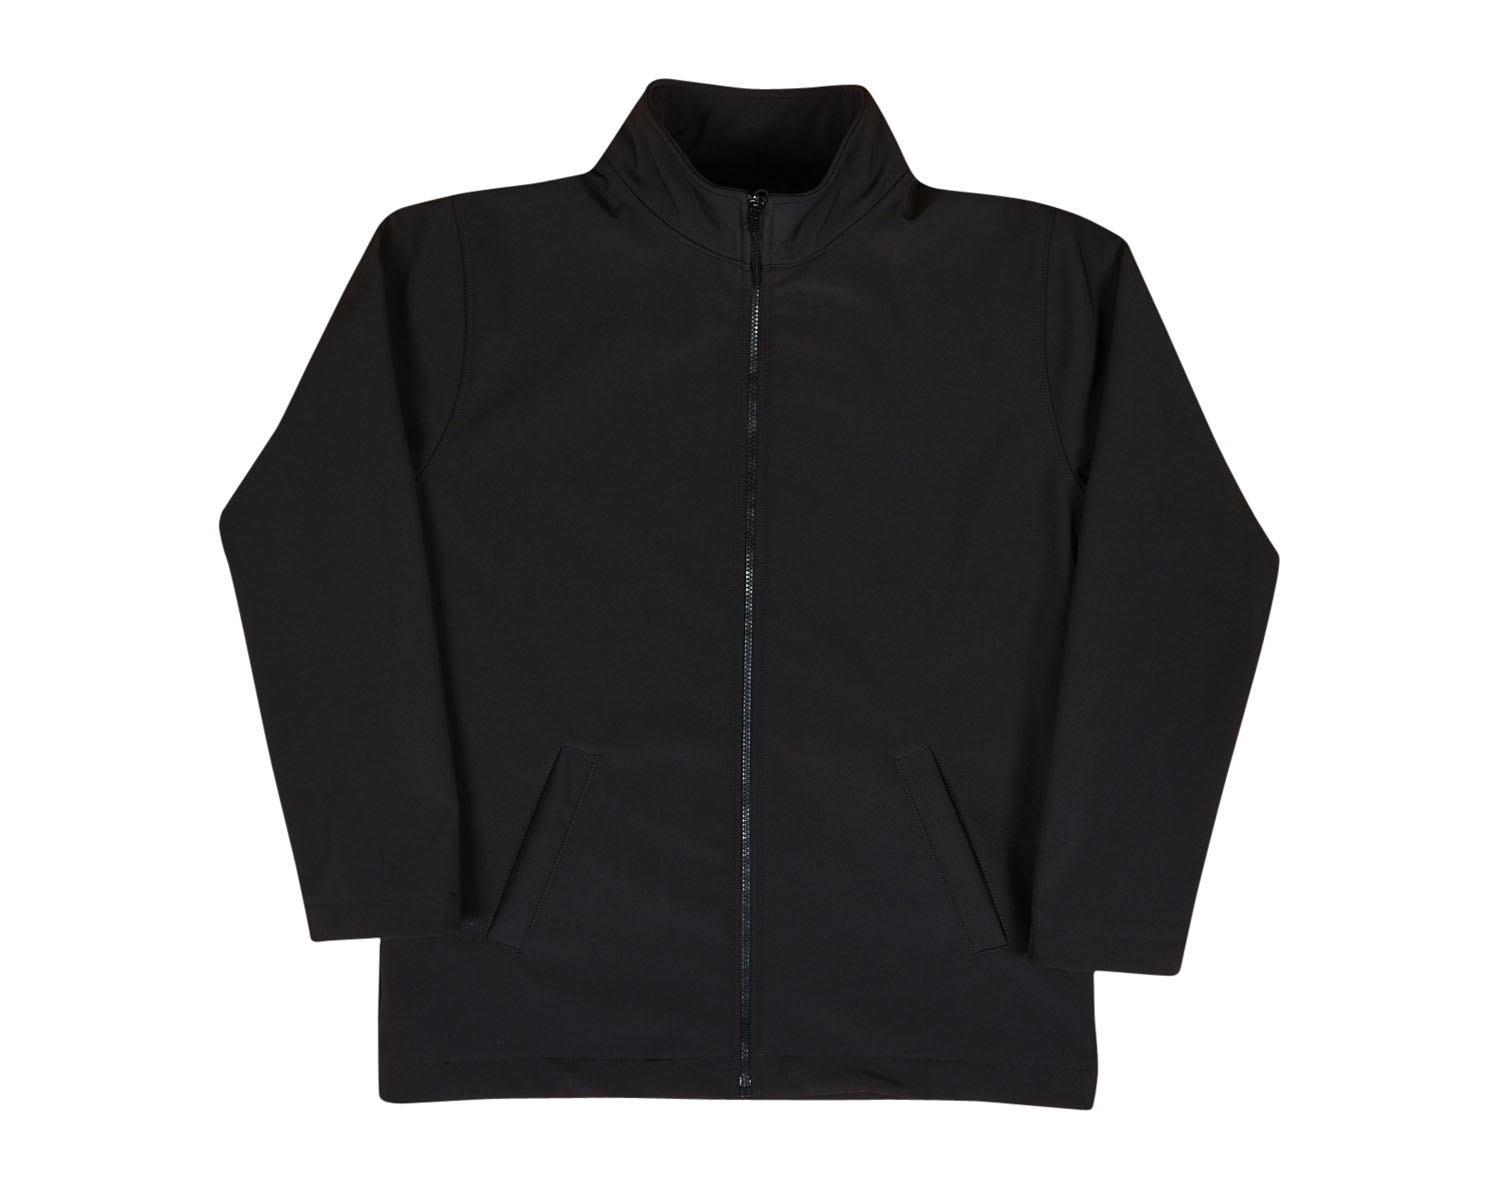 Qualitops-Softshell-Corporate-Jacket-Black-Men-1500×1200